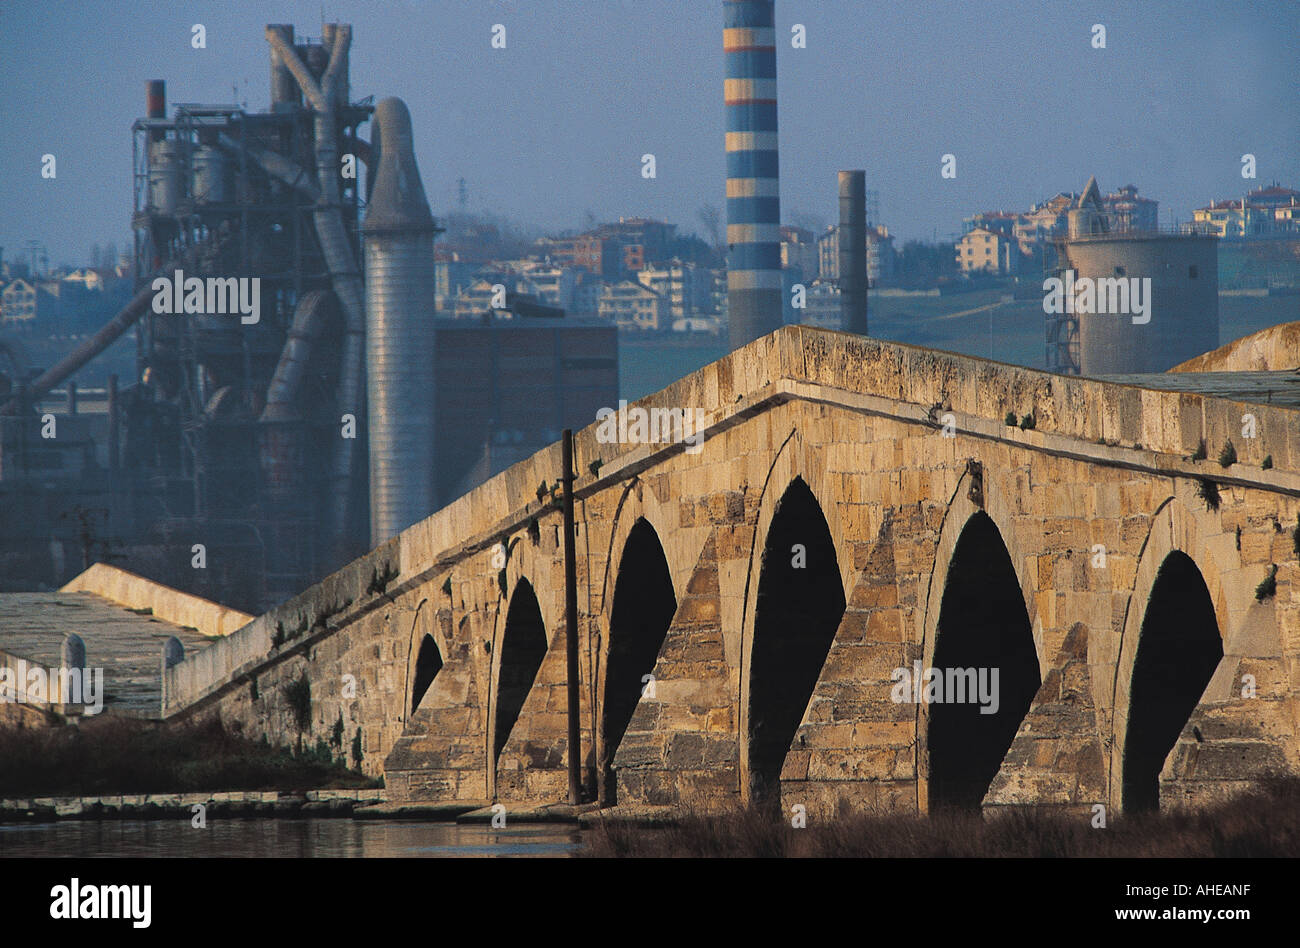 Sultan Suleiman Bridge made by architect Sinan in 1568, Istanbul Turkey. Stock Photo